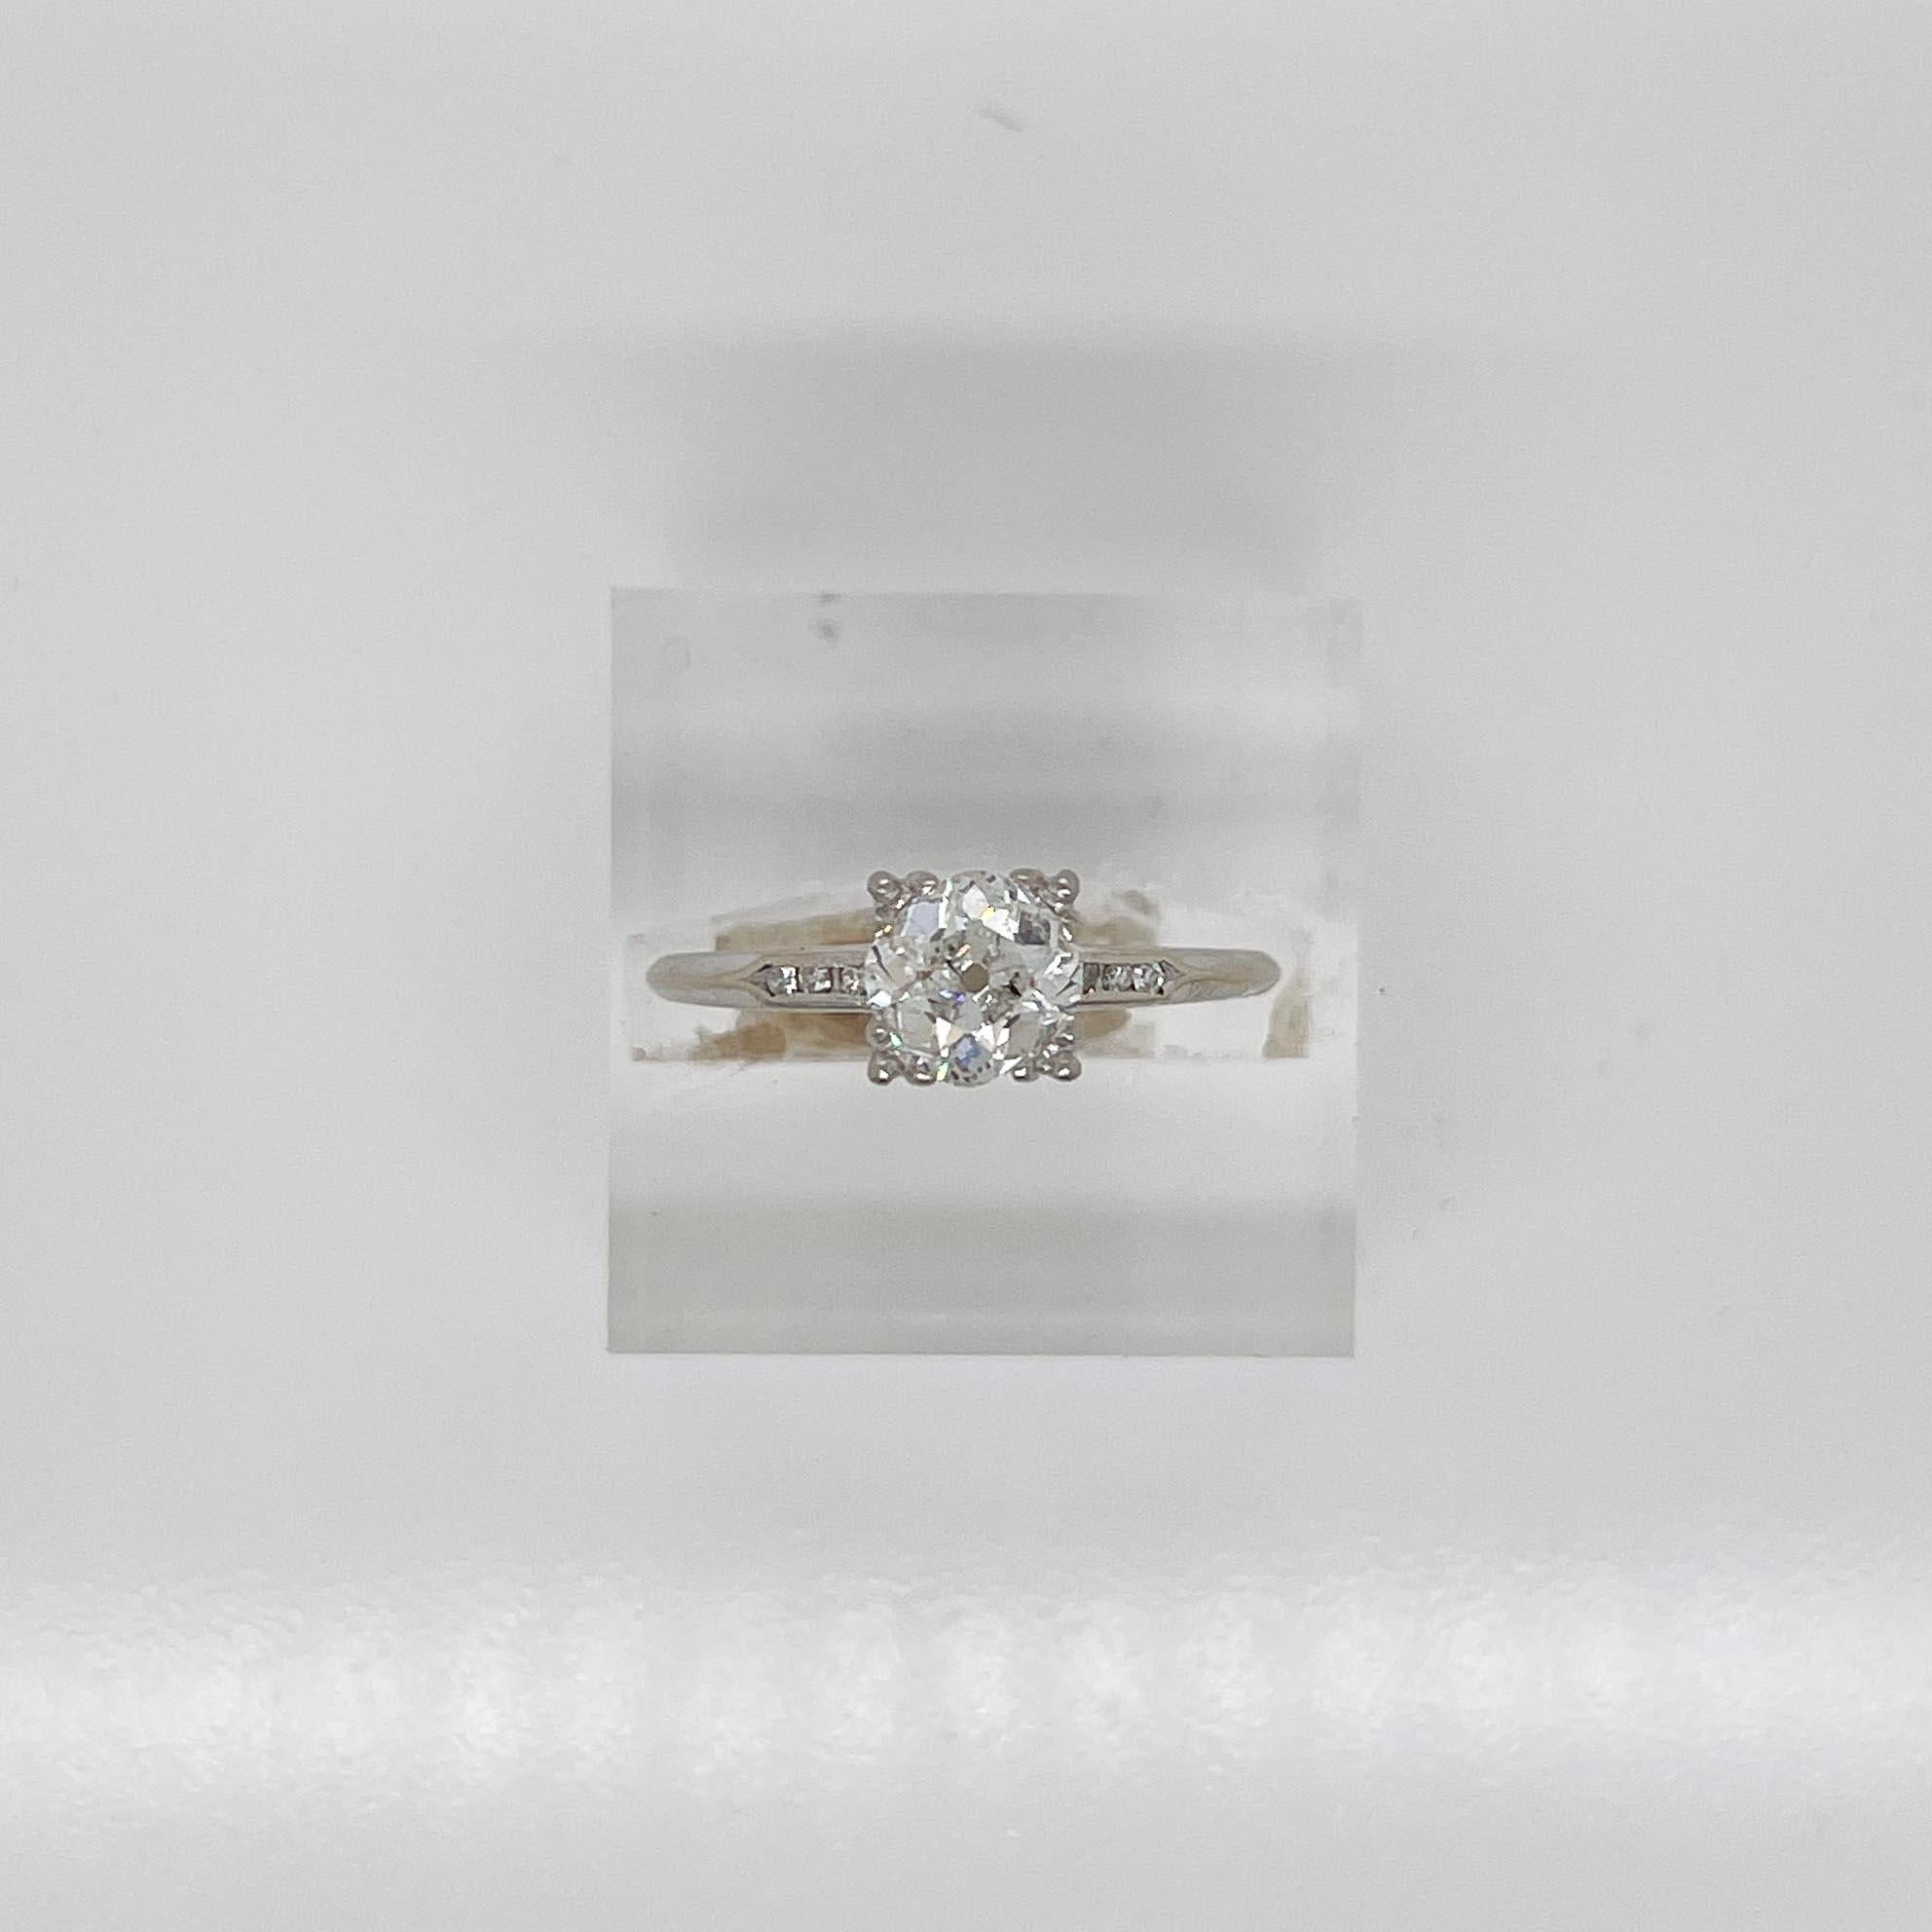 Vintage 14k White Gold & Old Mine Cut Diamond Engagement Ring For Sale 1